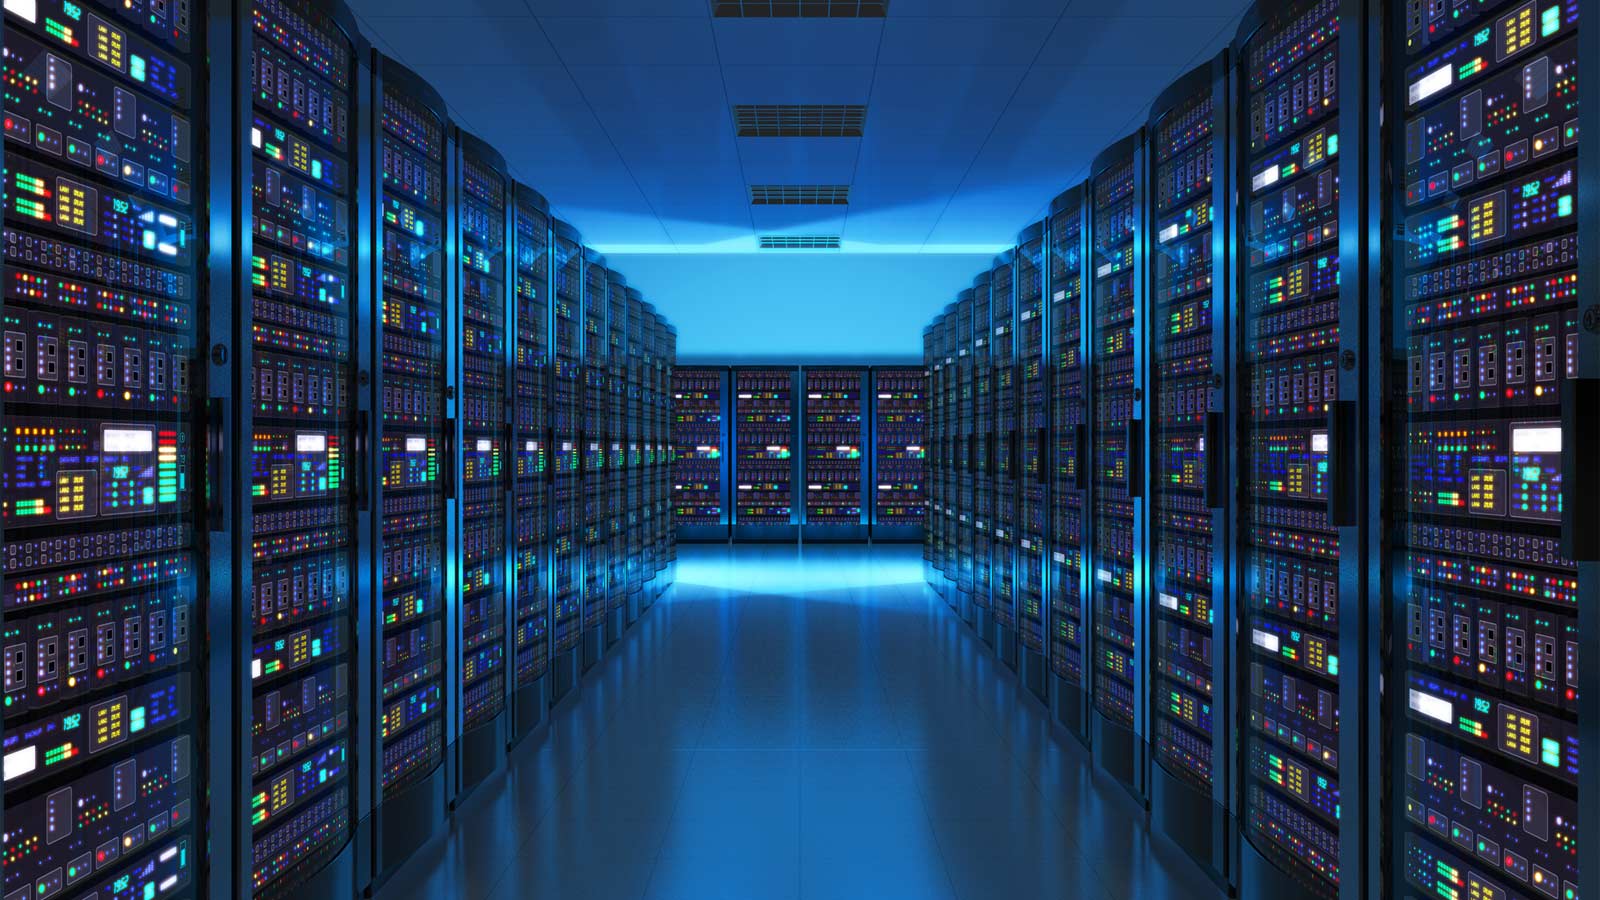 Computer server data center